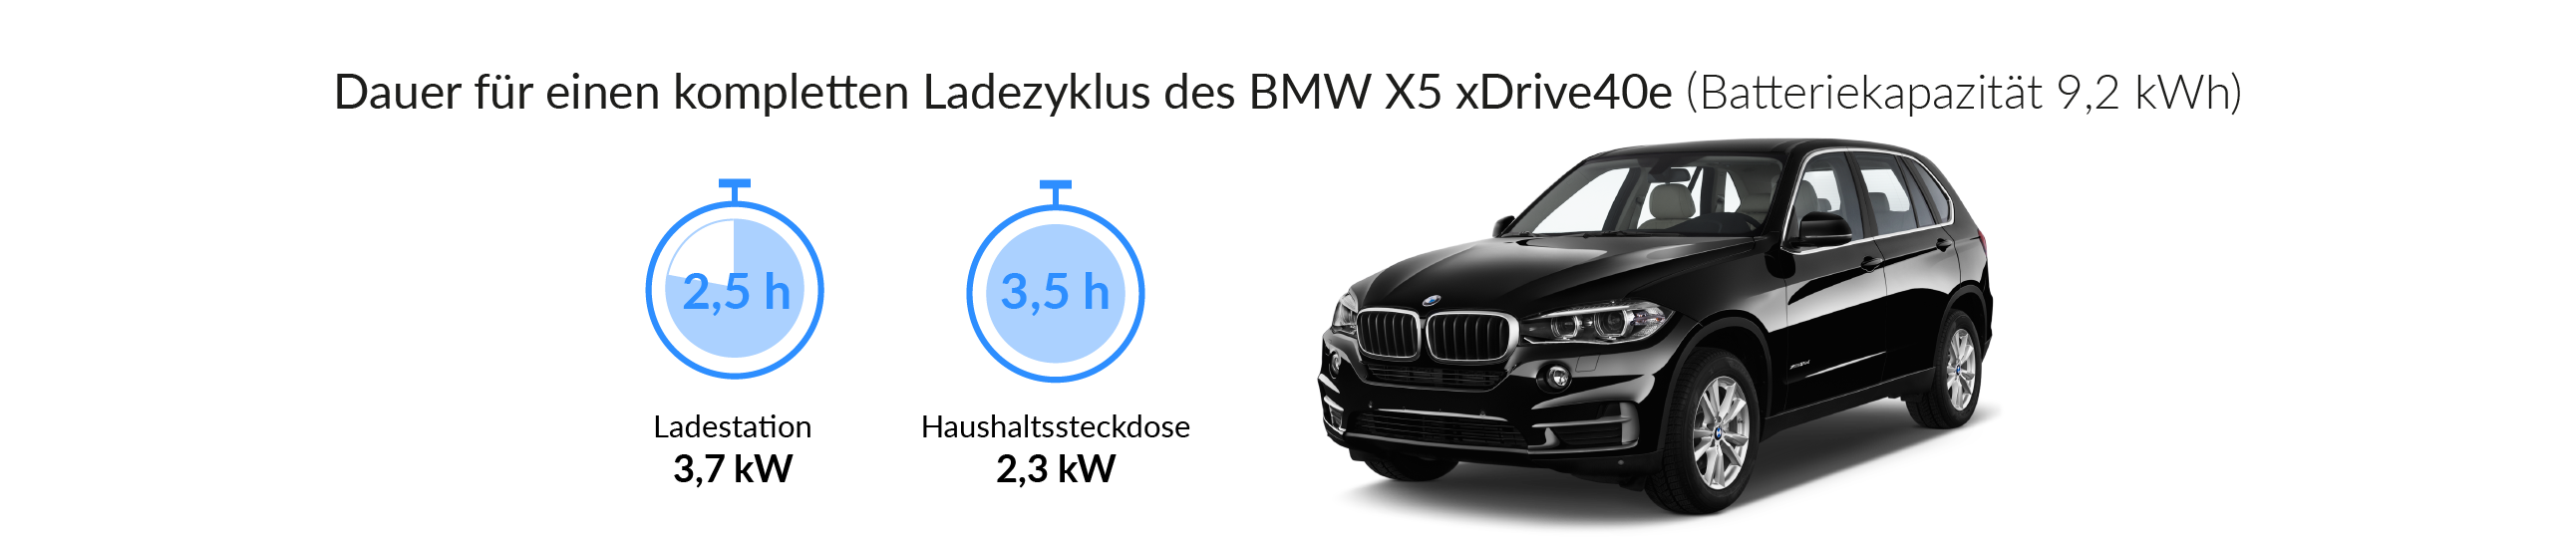 Ladezeiten des BMW X5 xDrive 40e